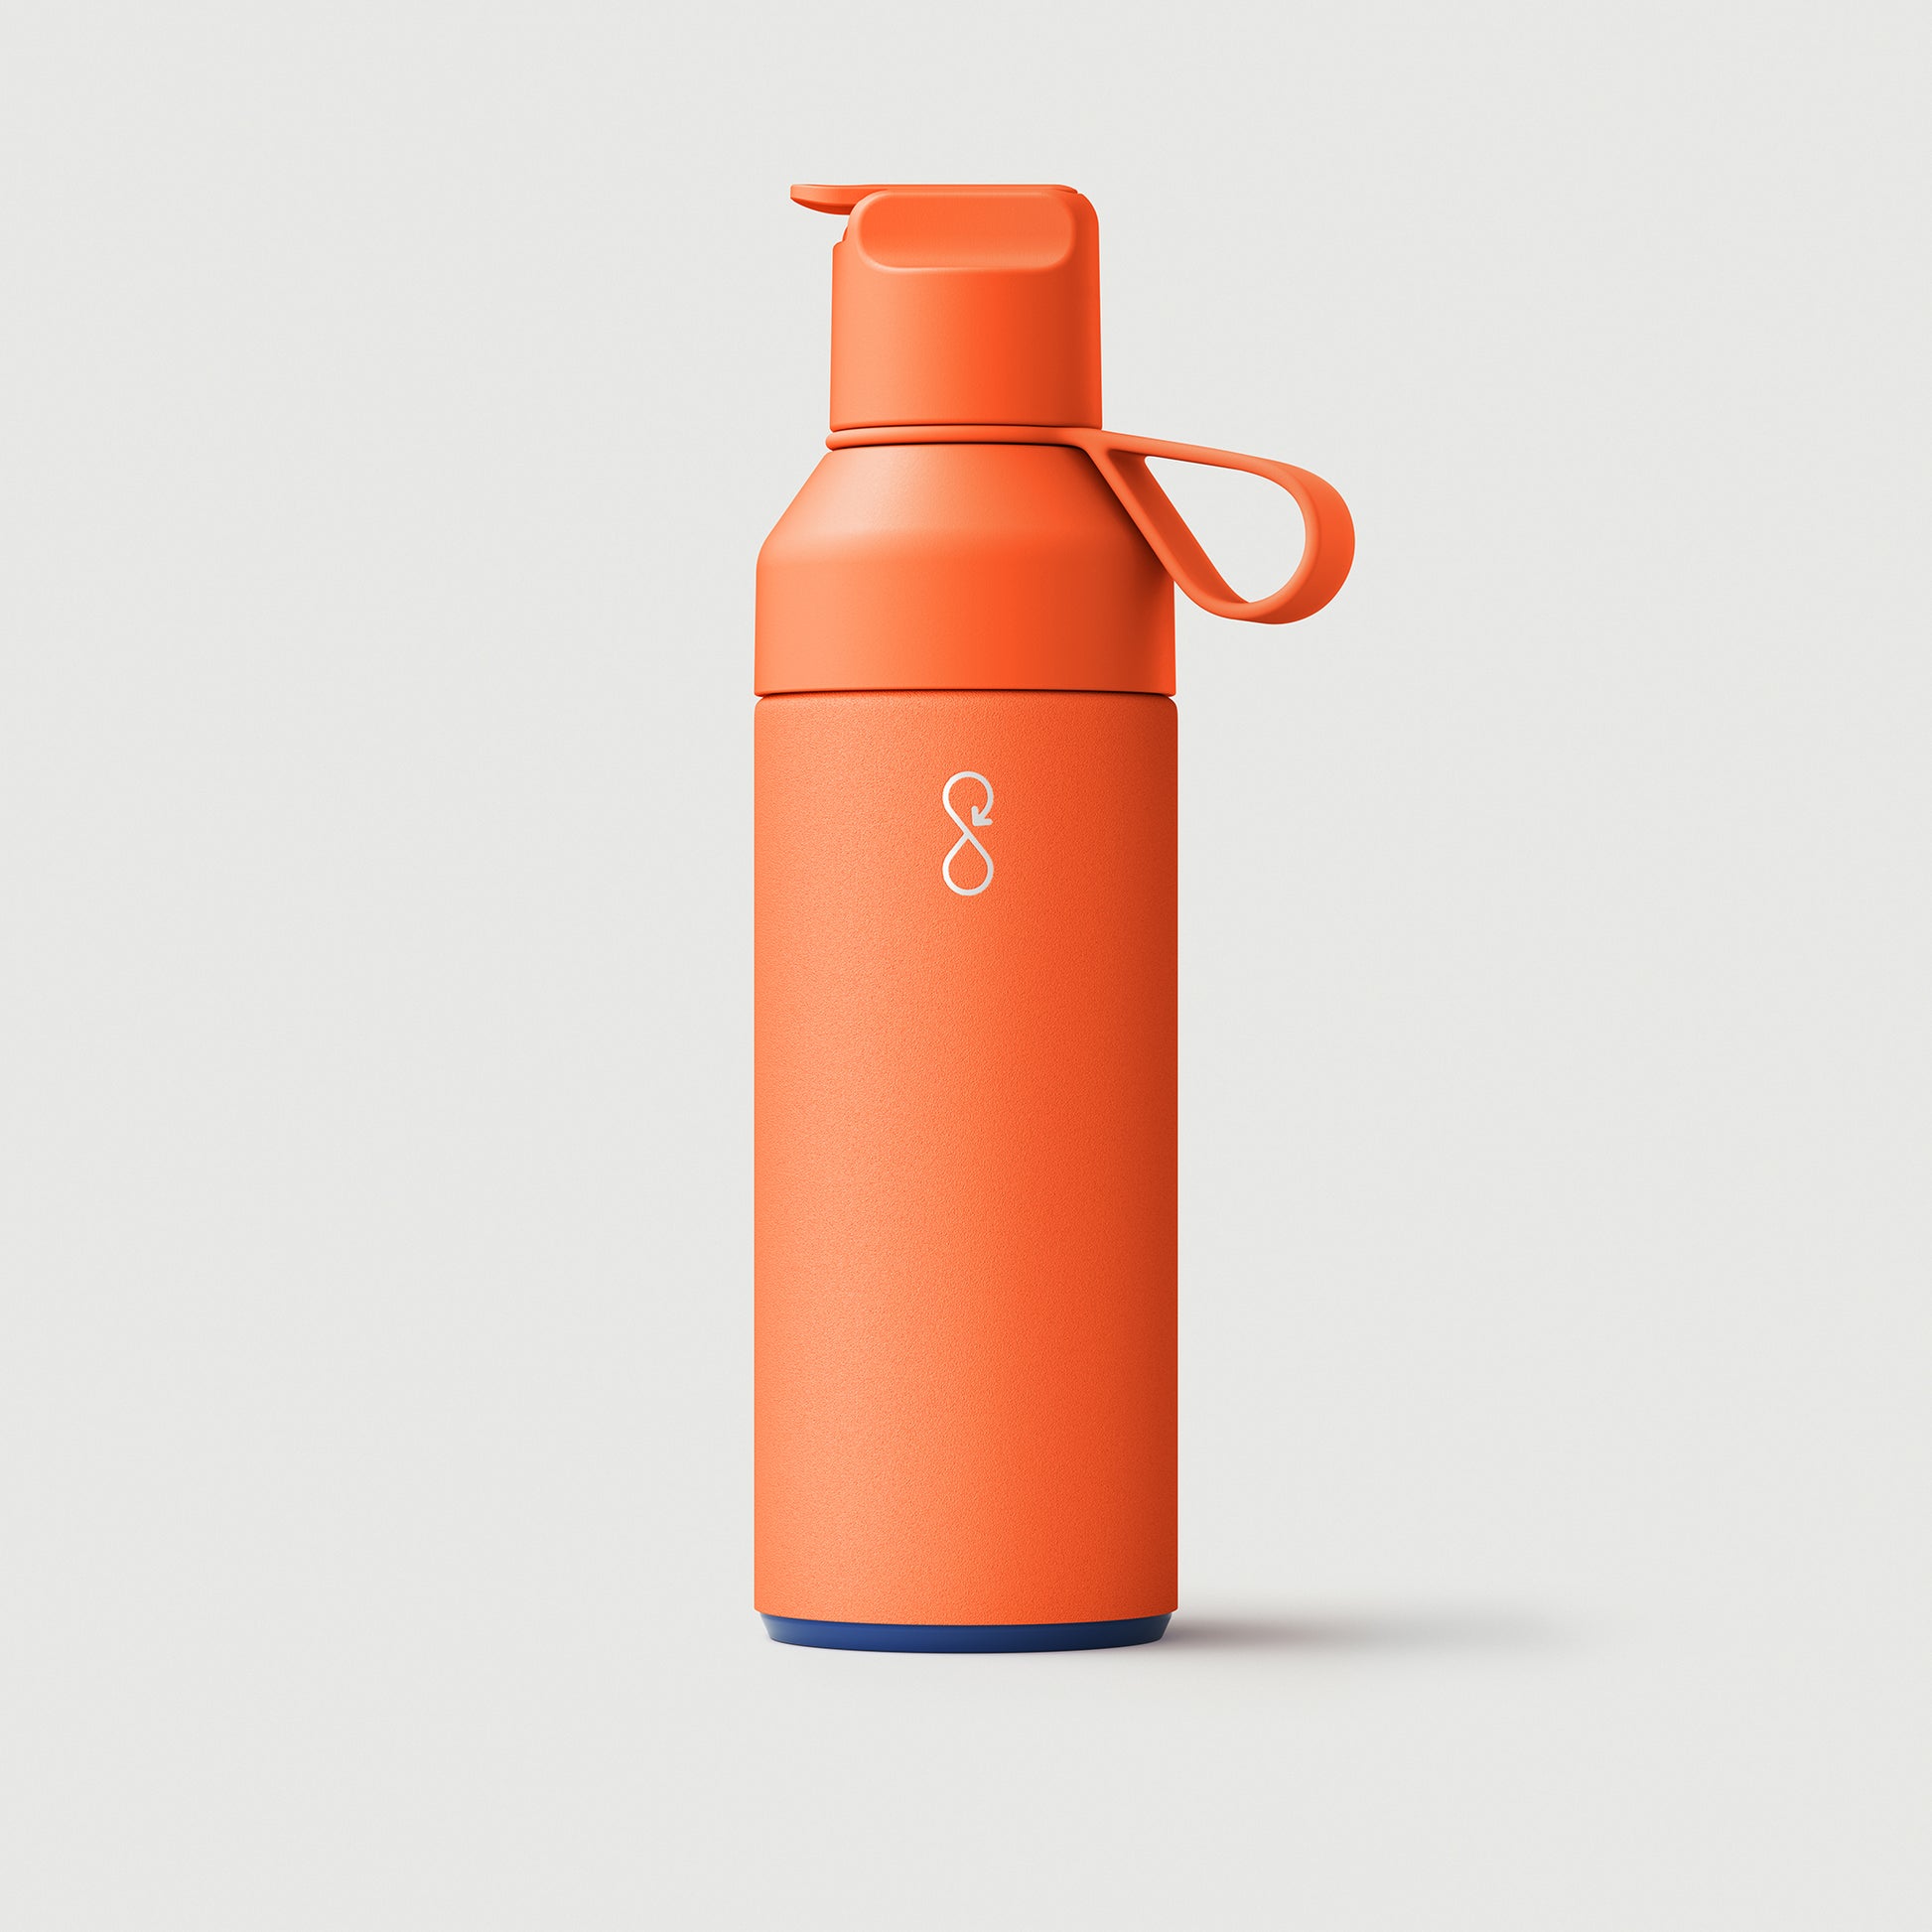 Orange Water Bottle with Straw